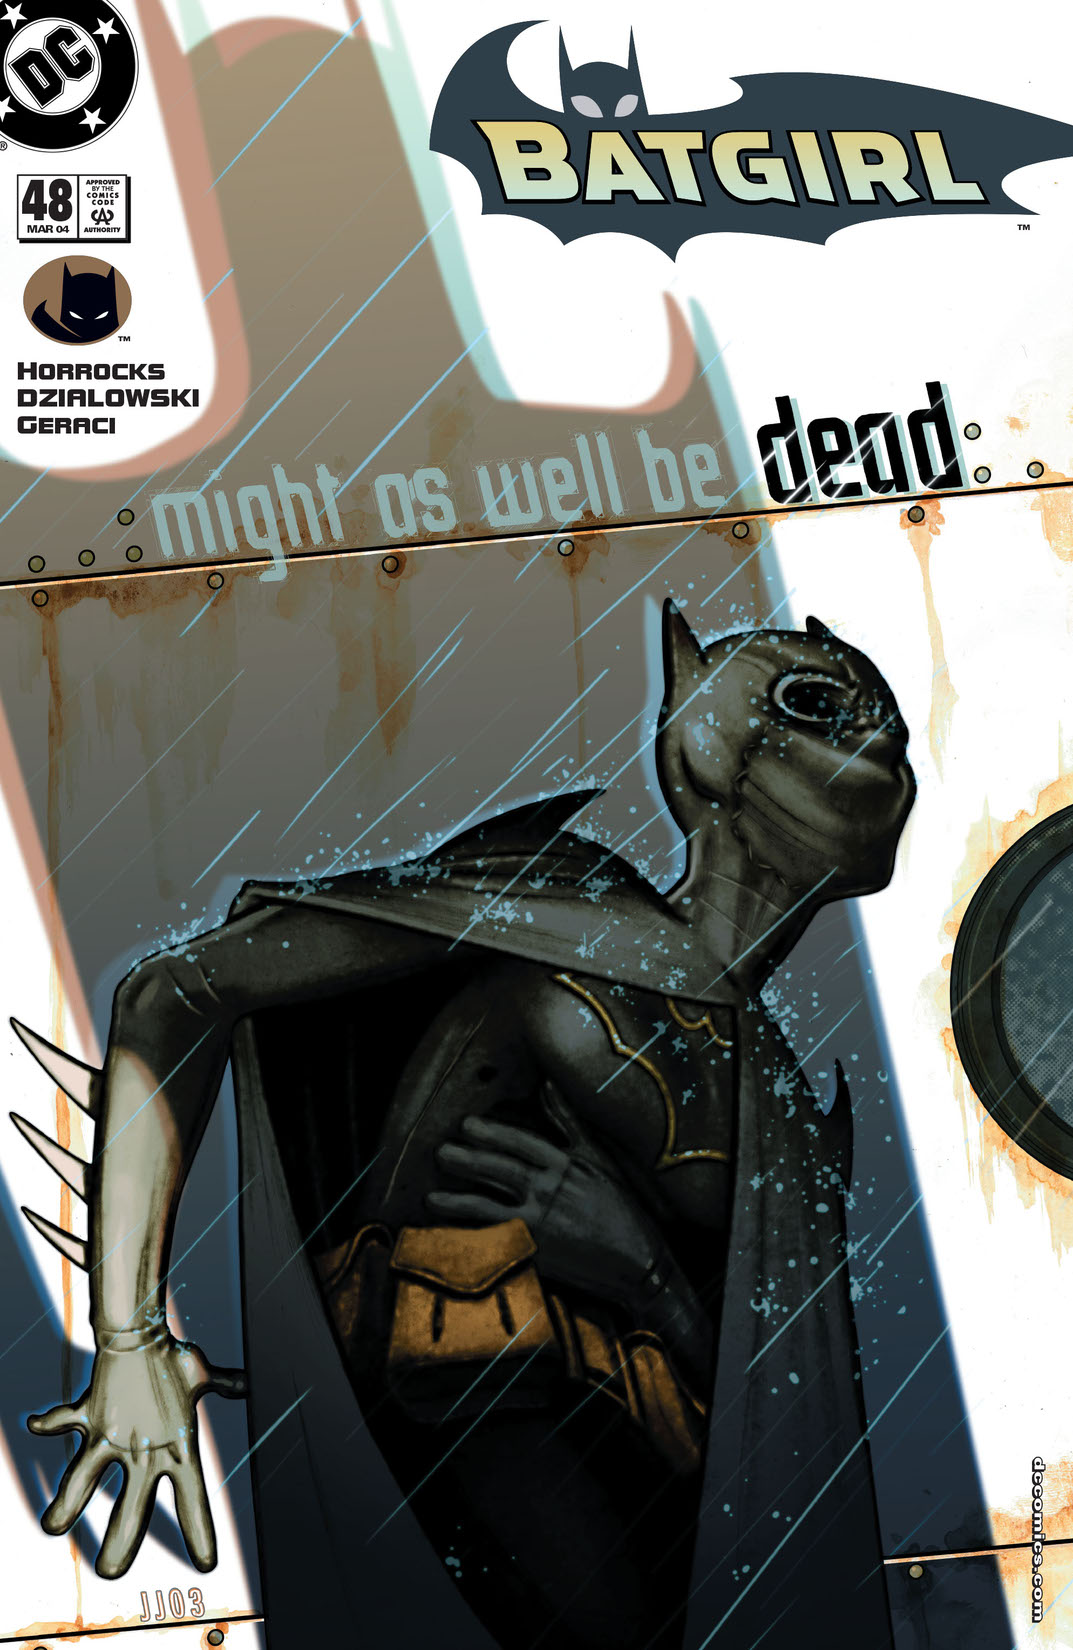 Batgirl (2000-) #48 preview images